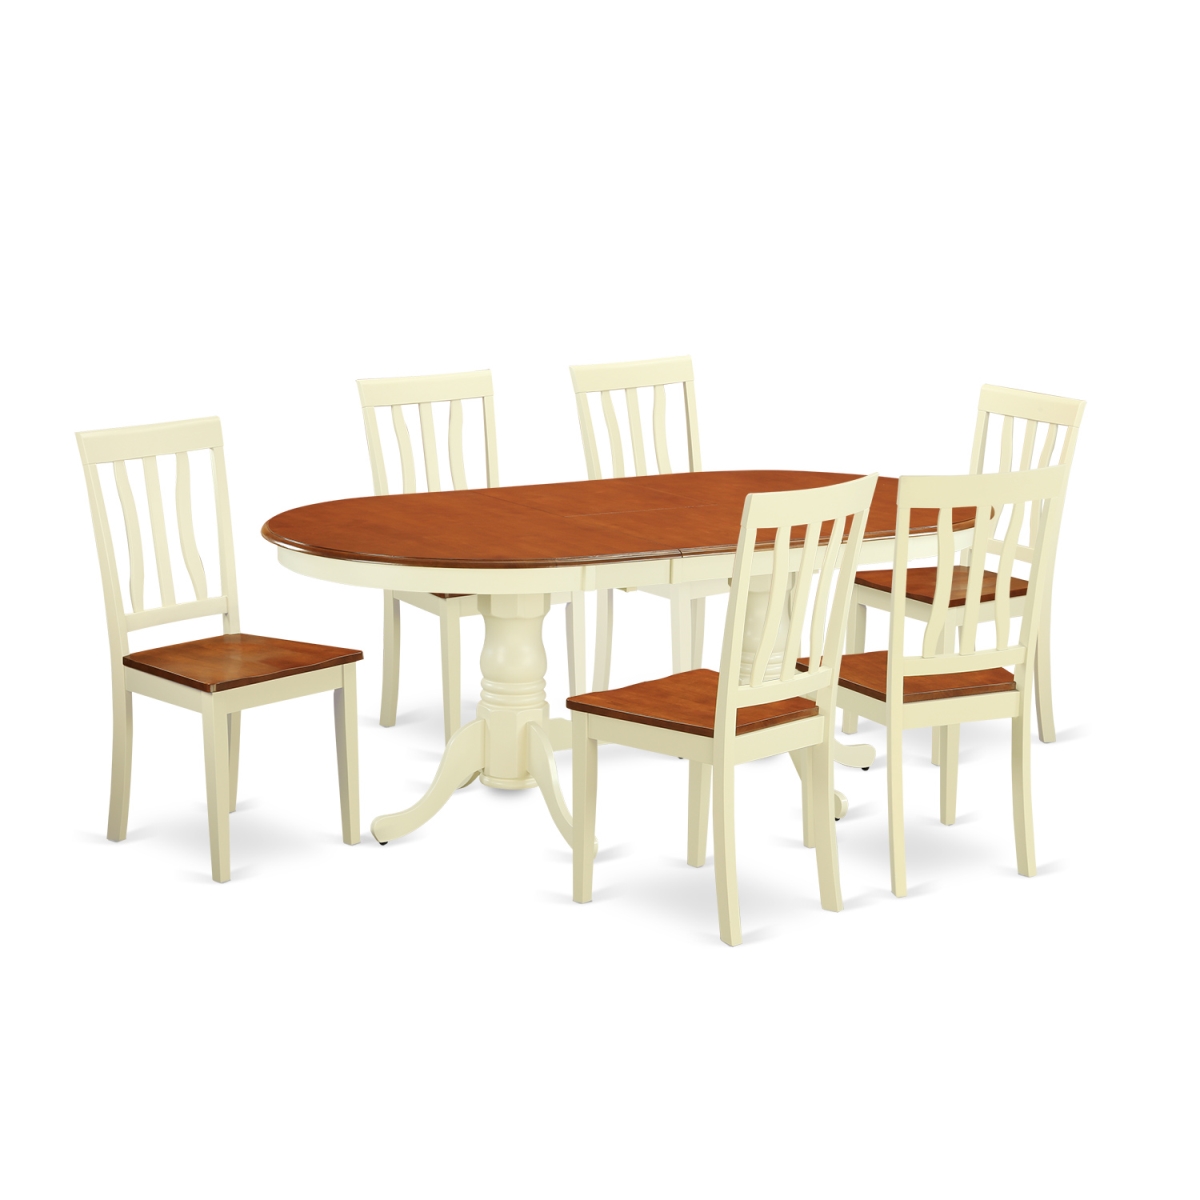 Plan7-whi-w Kitchen Dinette Set - Small Kitchen Table & 6 Chairs, Buttermilk & Cherry - 7 Piece